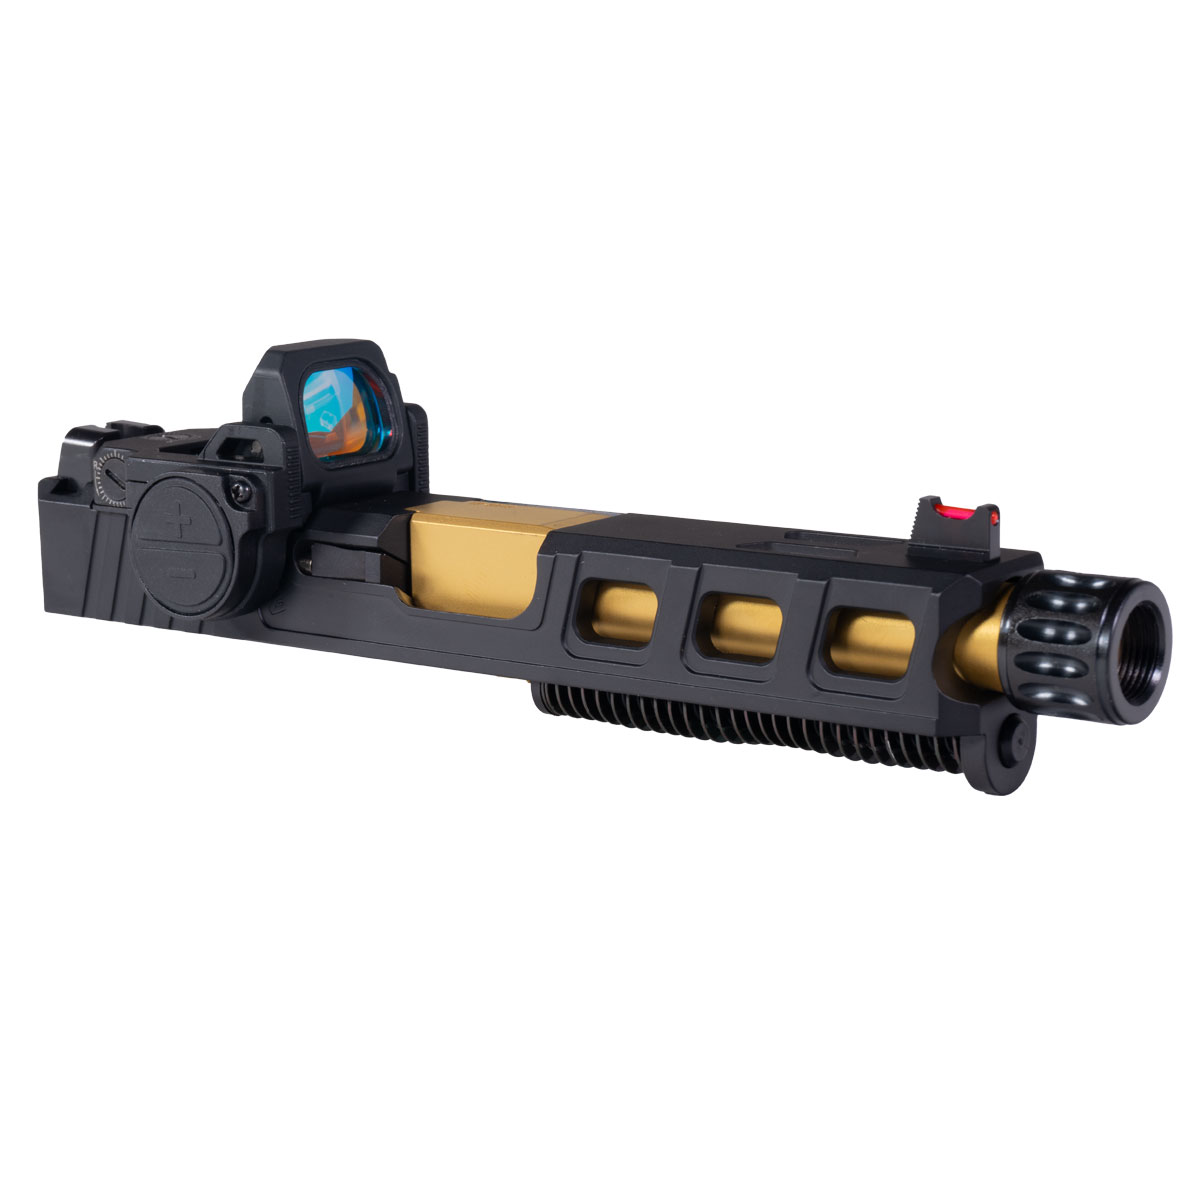 DD 'Insidiae w/ VISM FlipDot Pro' 9mm Complete Slide Kit - Glock 19 Gen 1-3 Compatible